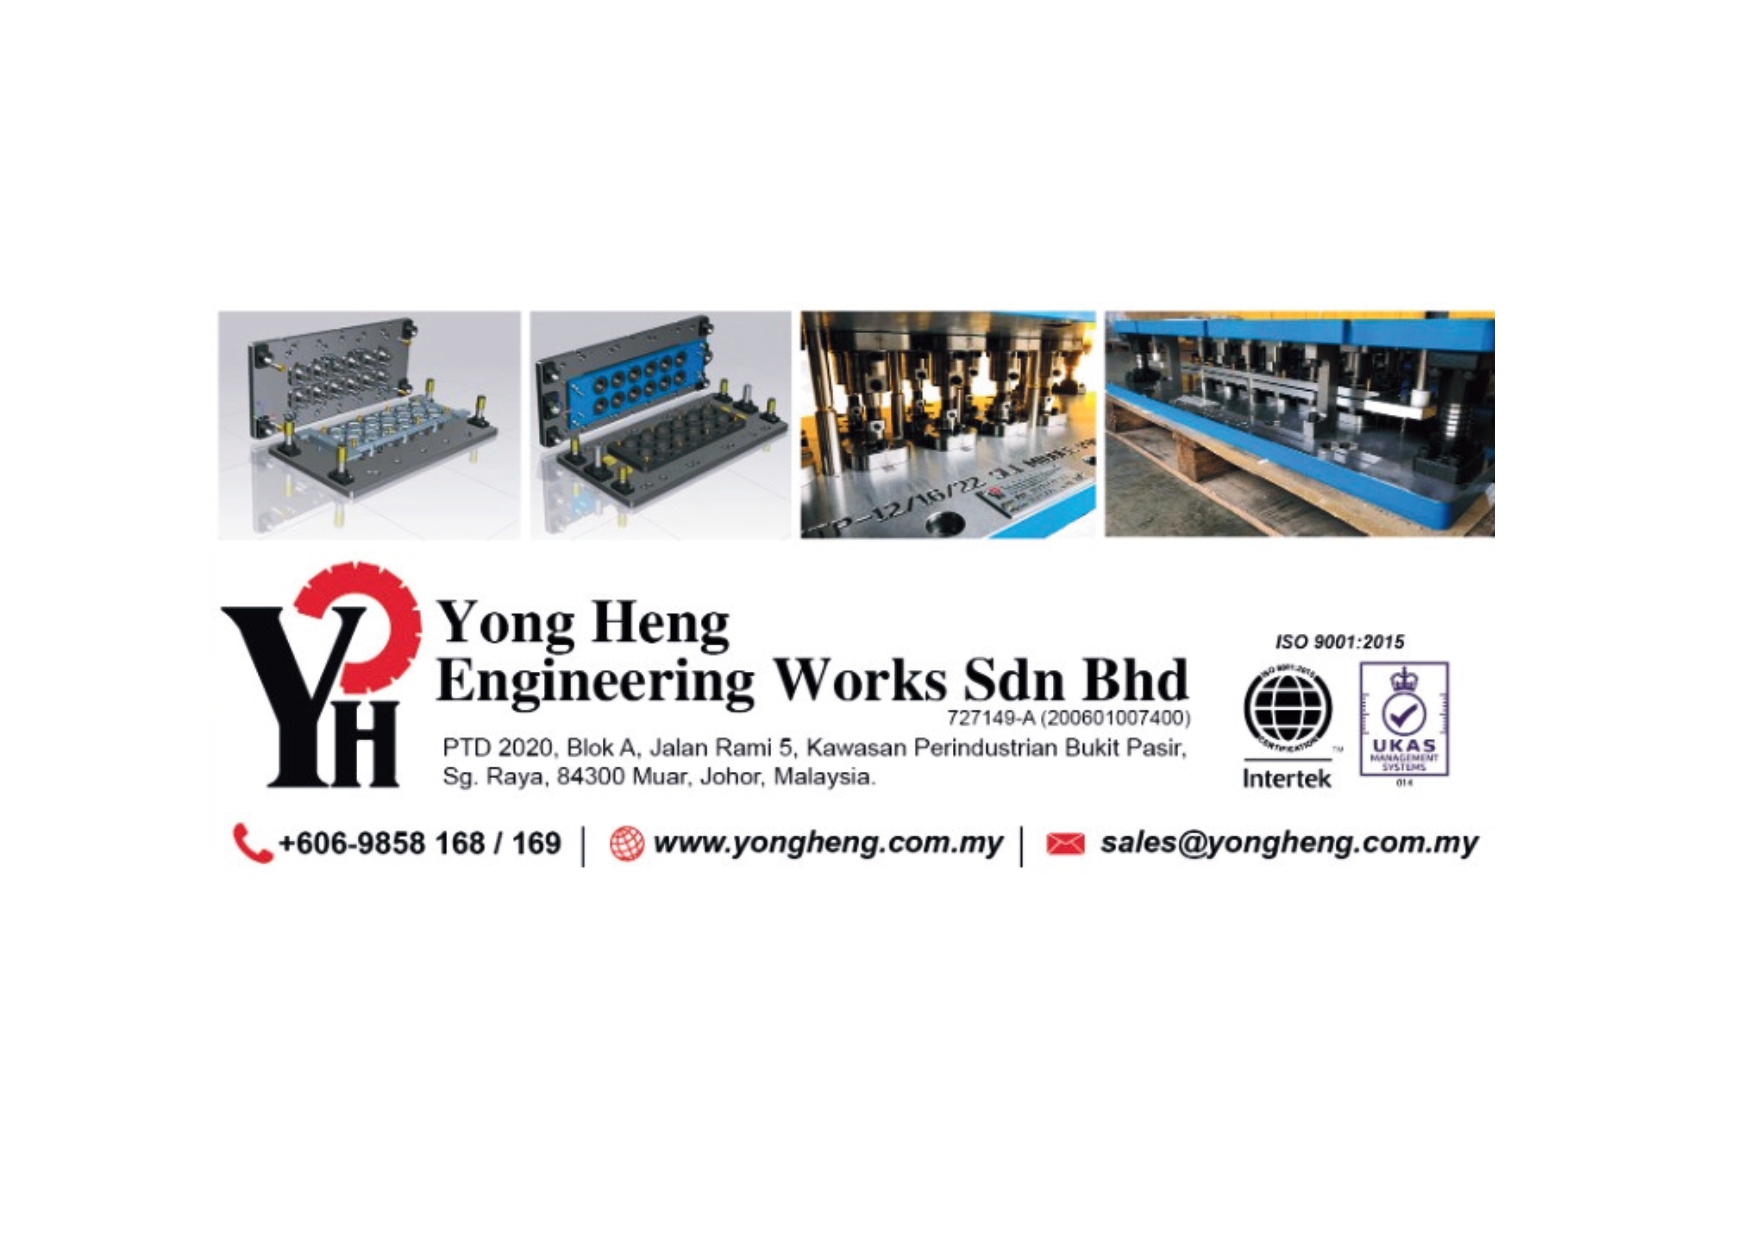 YONG HENG ENGINEERING WORKS SDN. BHD.